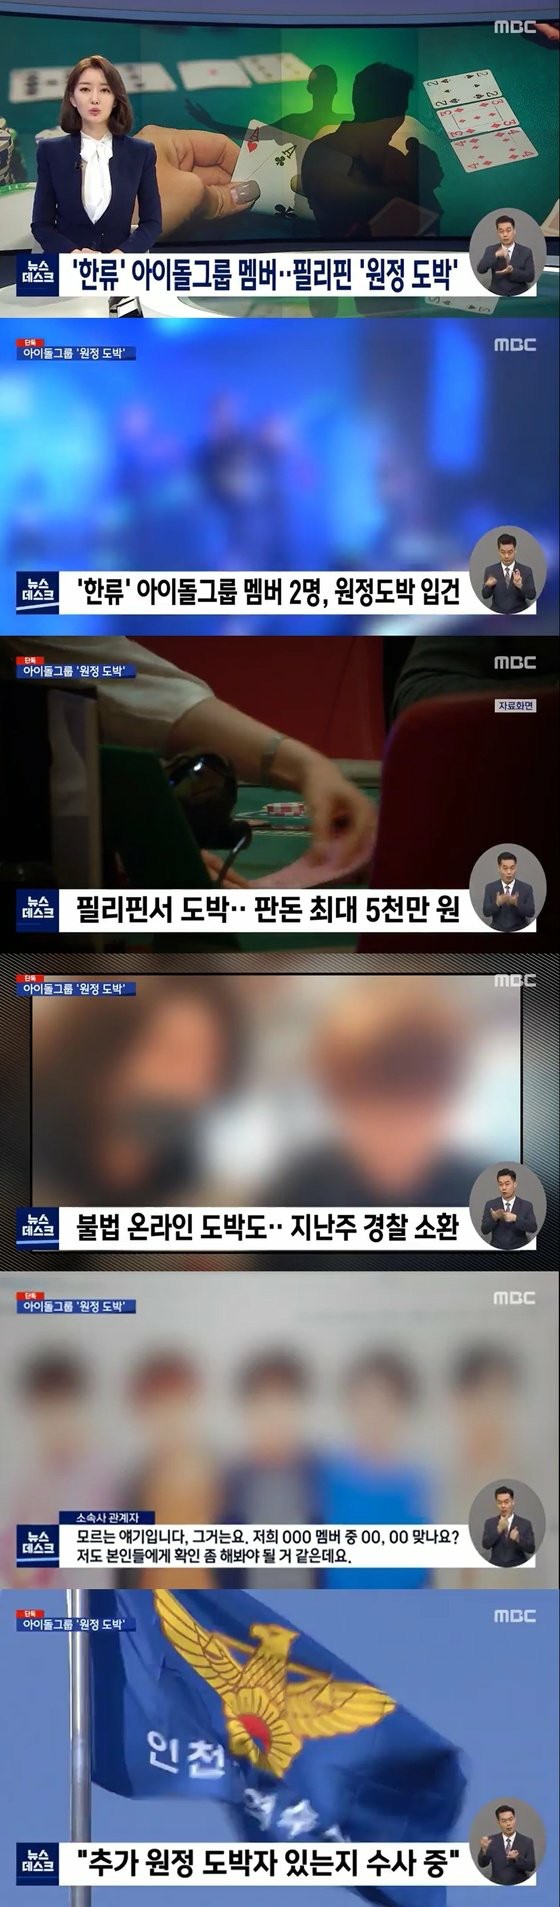 Dua anggota idola terkenal berusia tiga puluhan melaporkan kasus dugaan perjudian ekspedisi luar negeri dan MBC melaporkan ... Taruhan yang mencapai 50 juta won